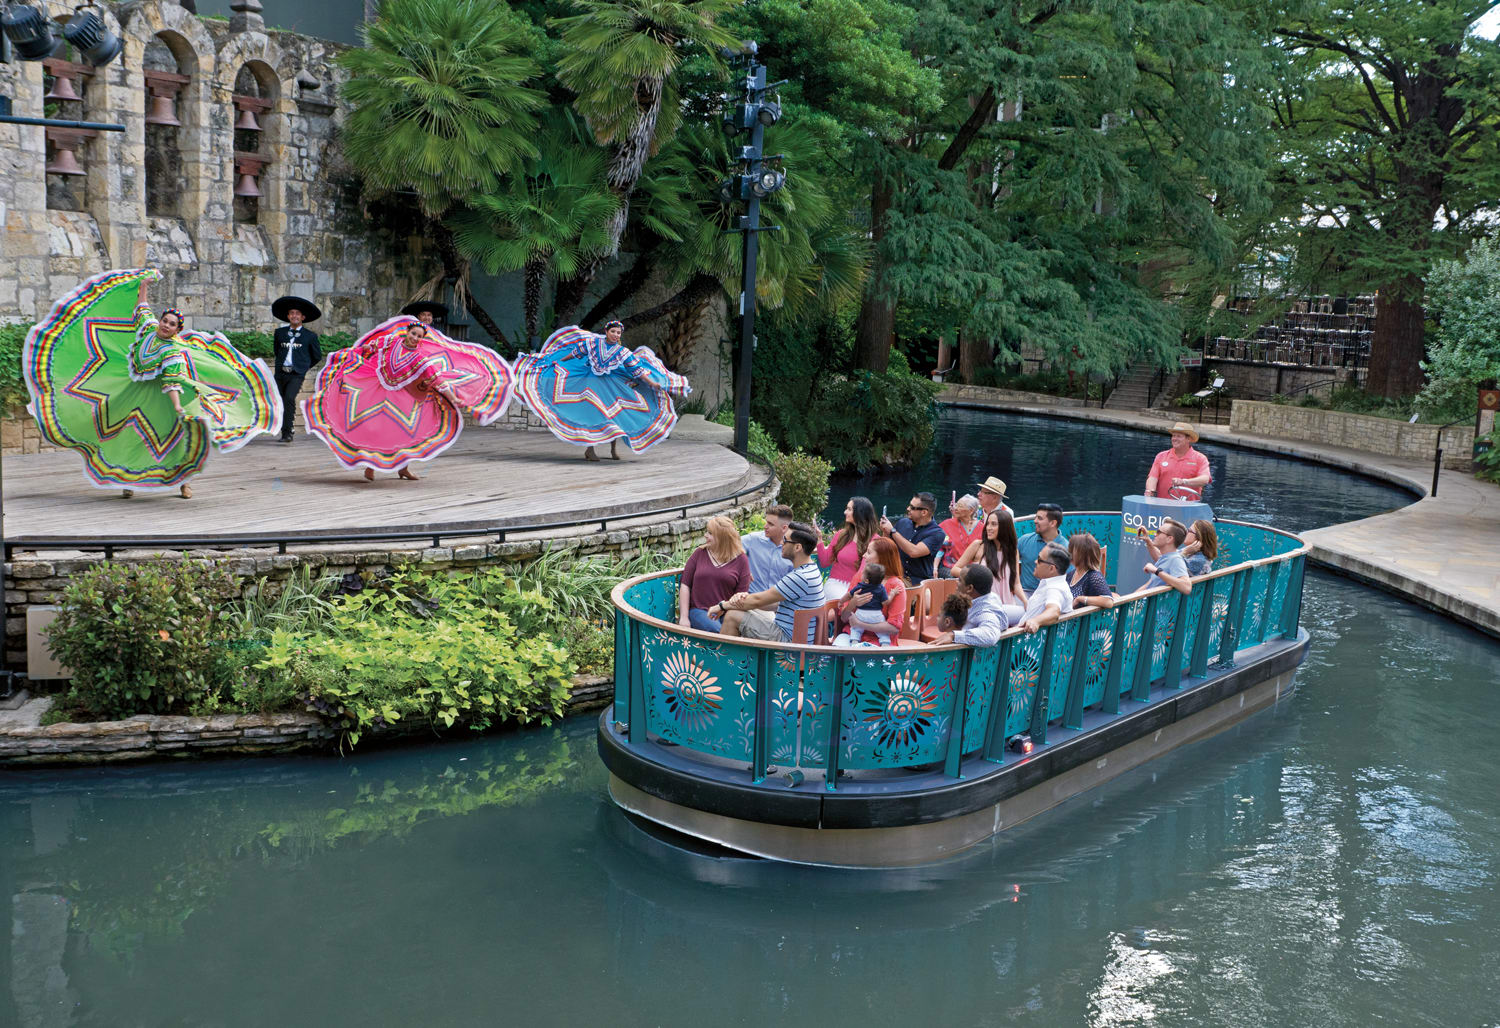 San Antonio River Cruise